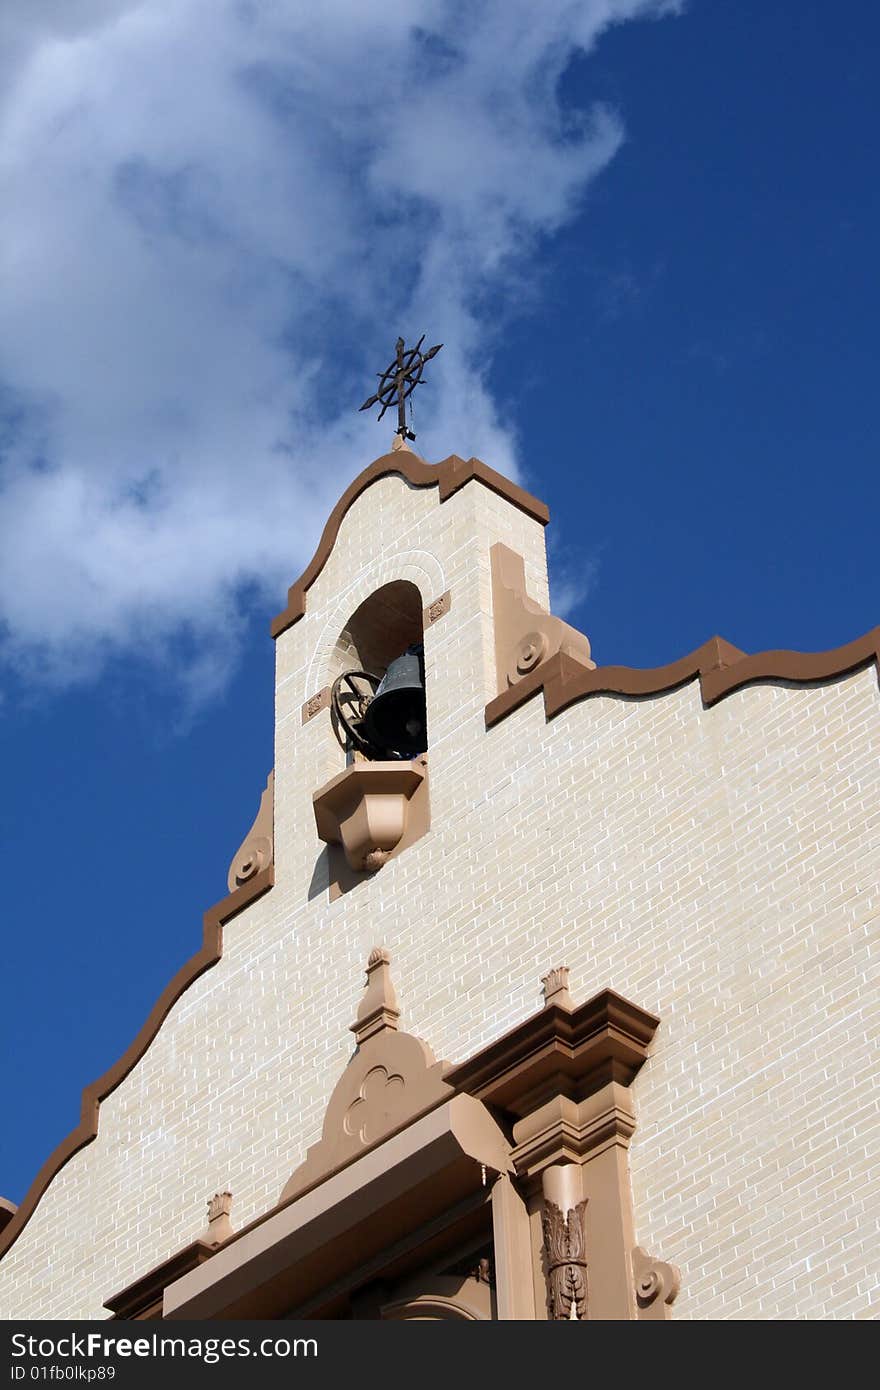 European Style Church Steeple on a beautiful day.